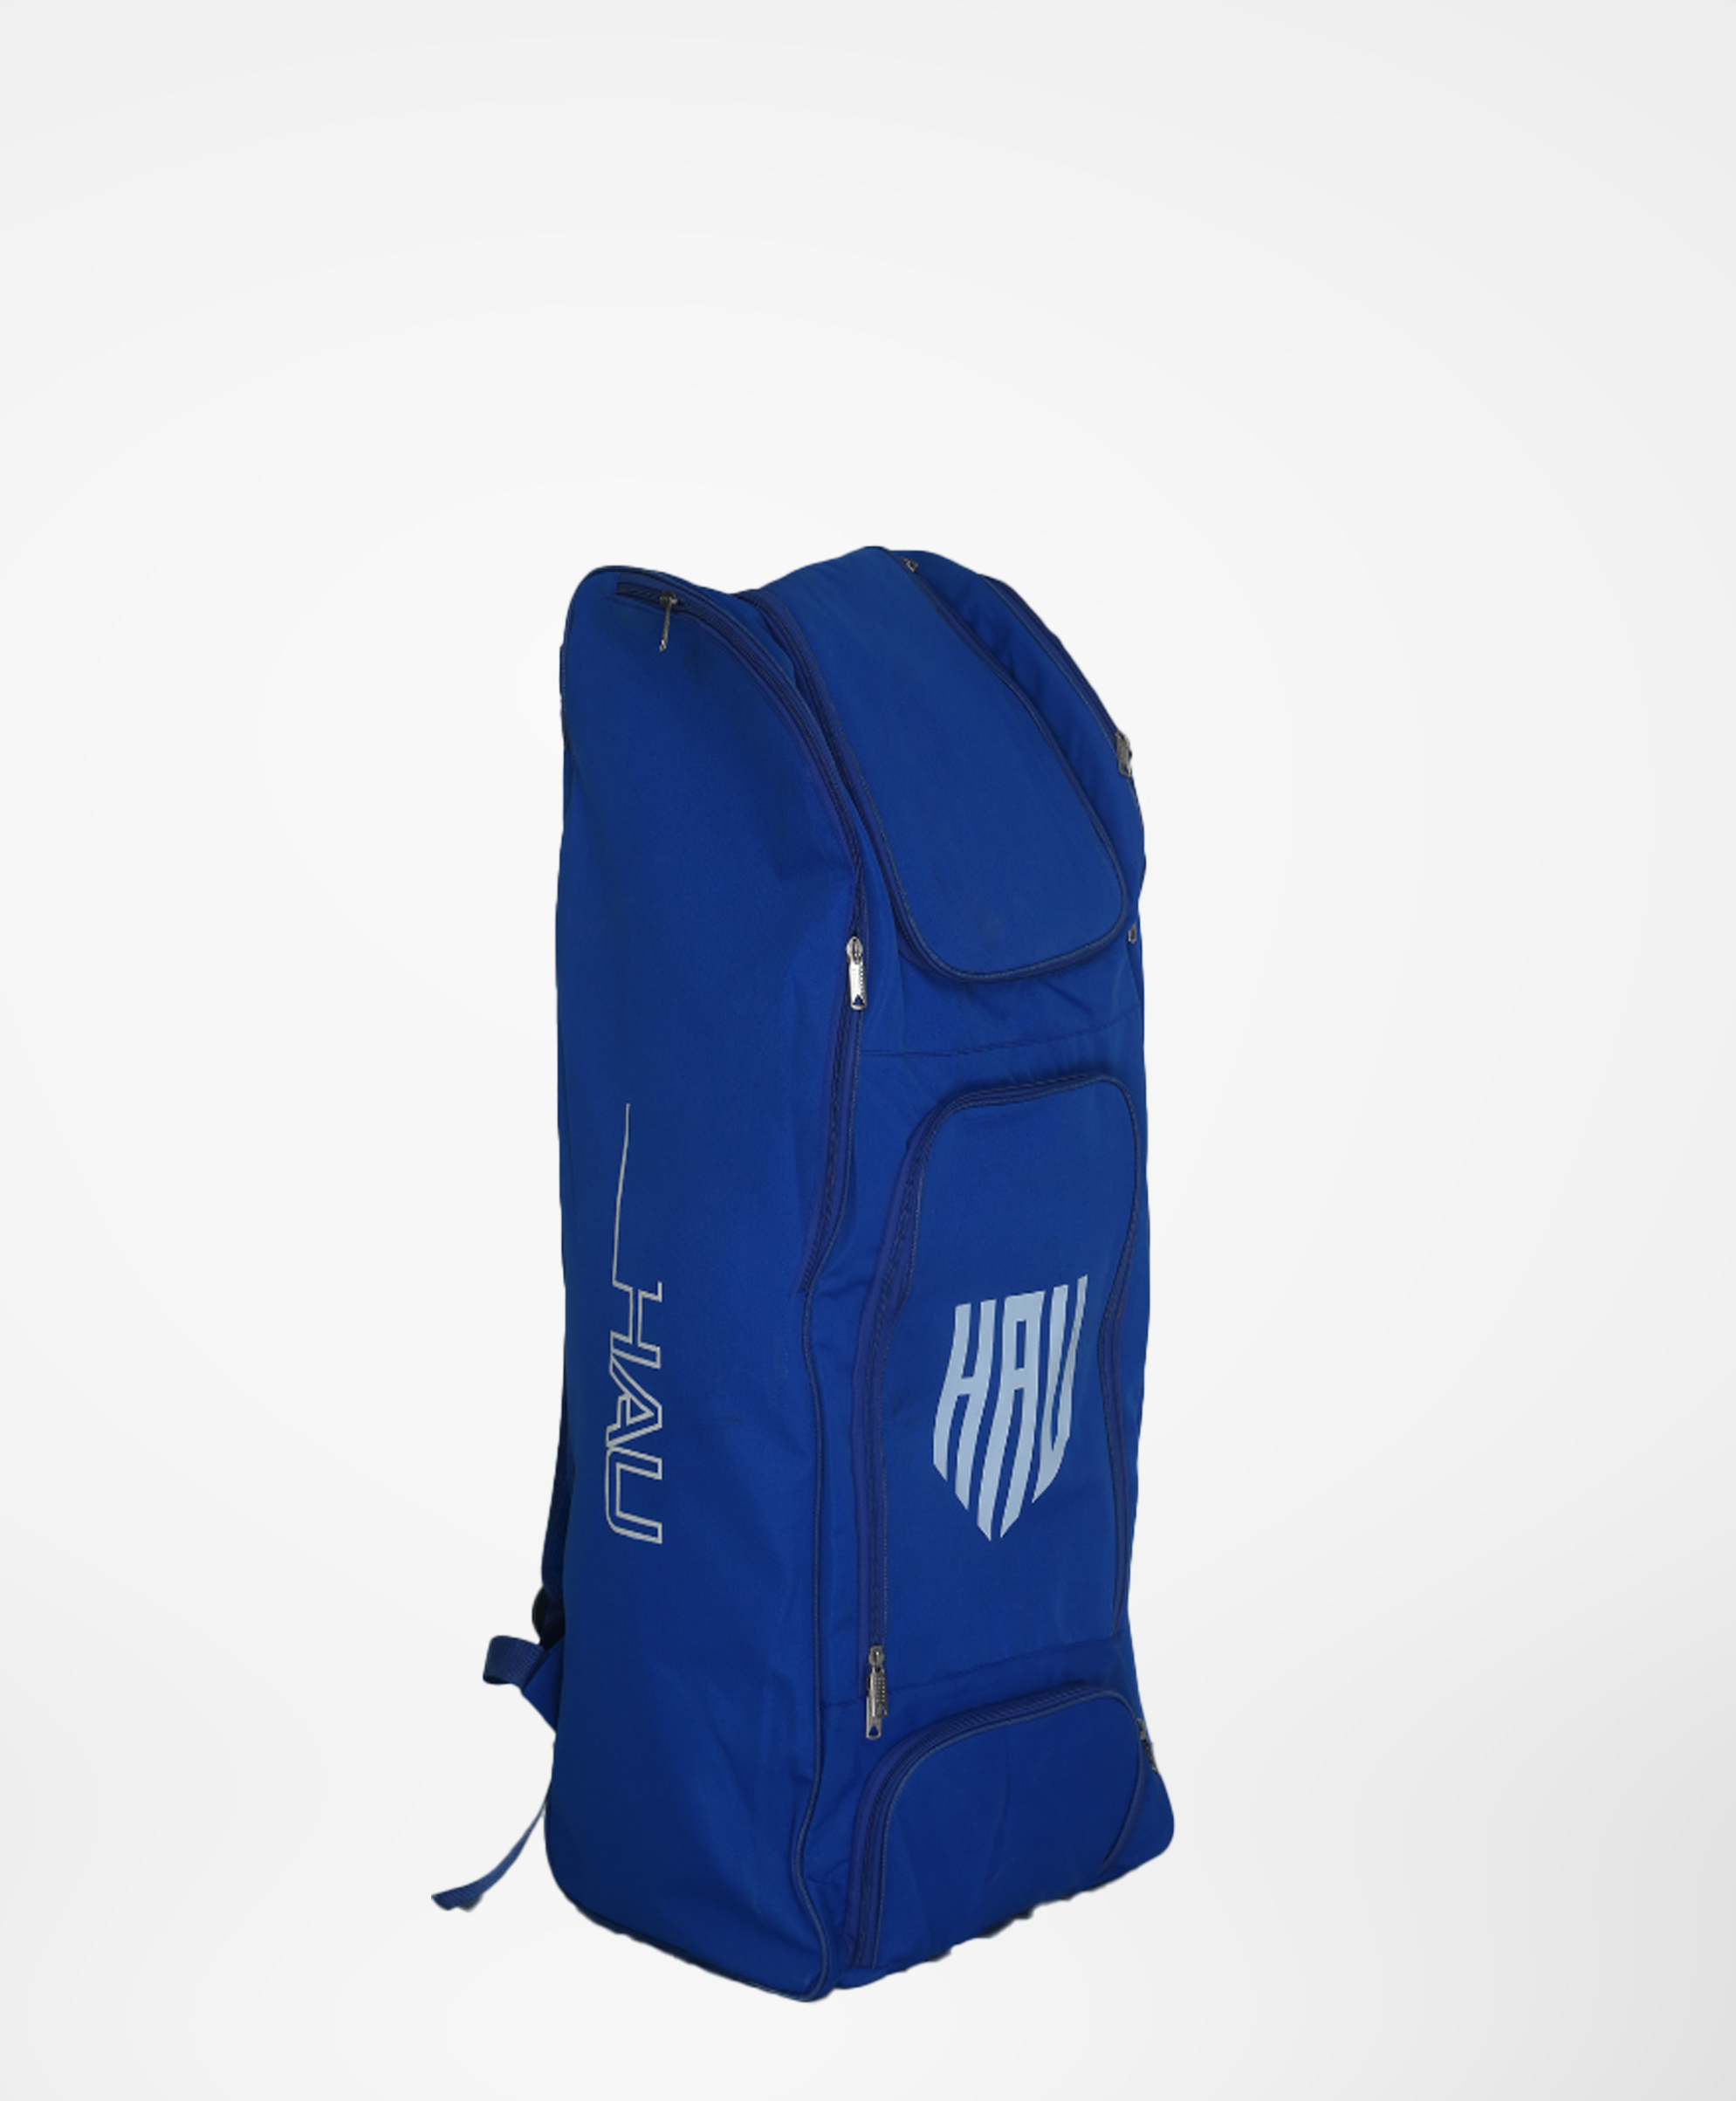 Kookaburra Beast Pro D6.5 Duffle Cricket Kit Bag - Cricket Best Buy